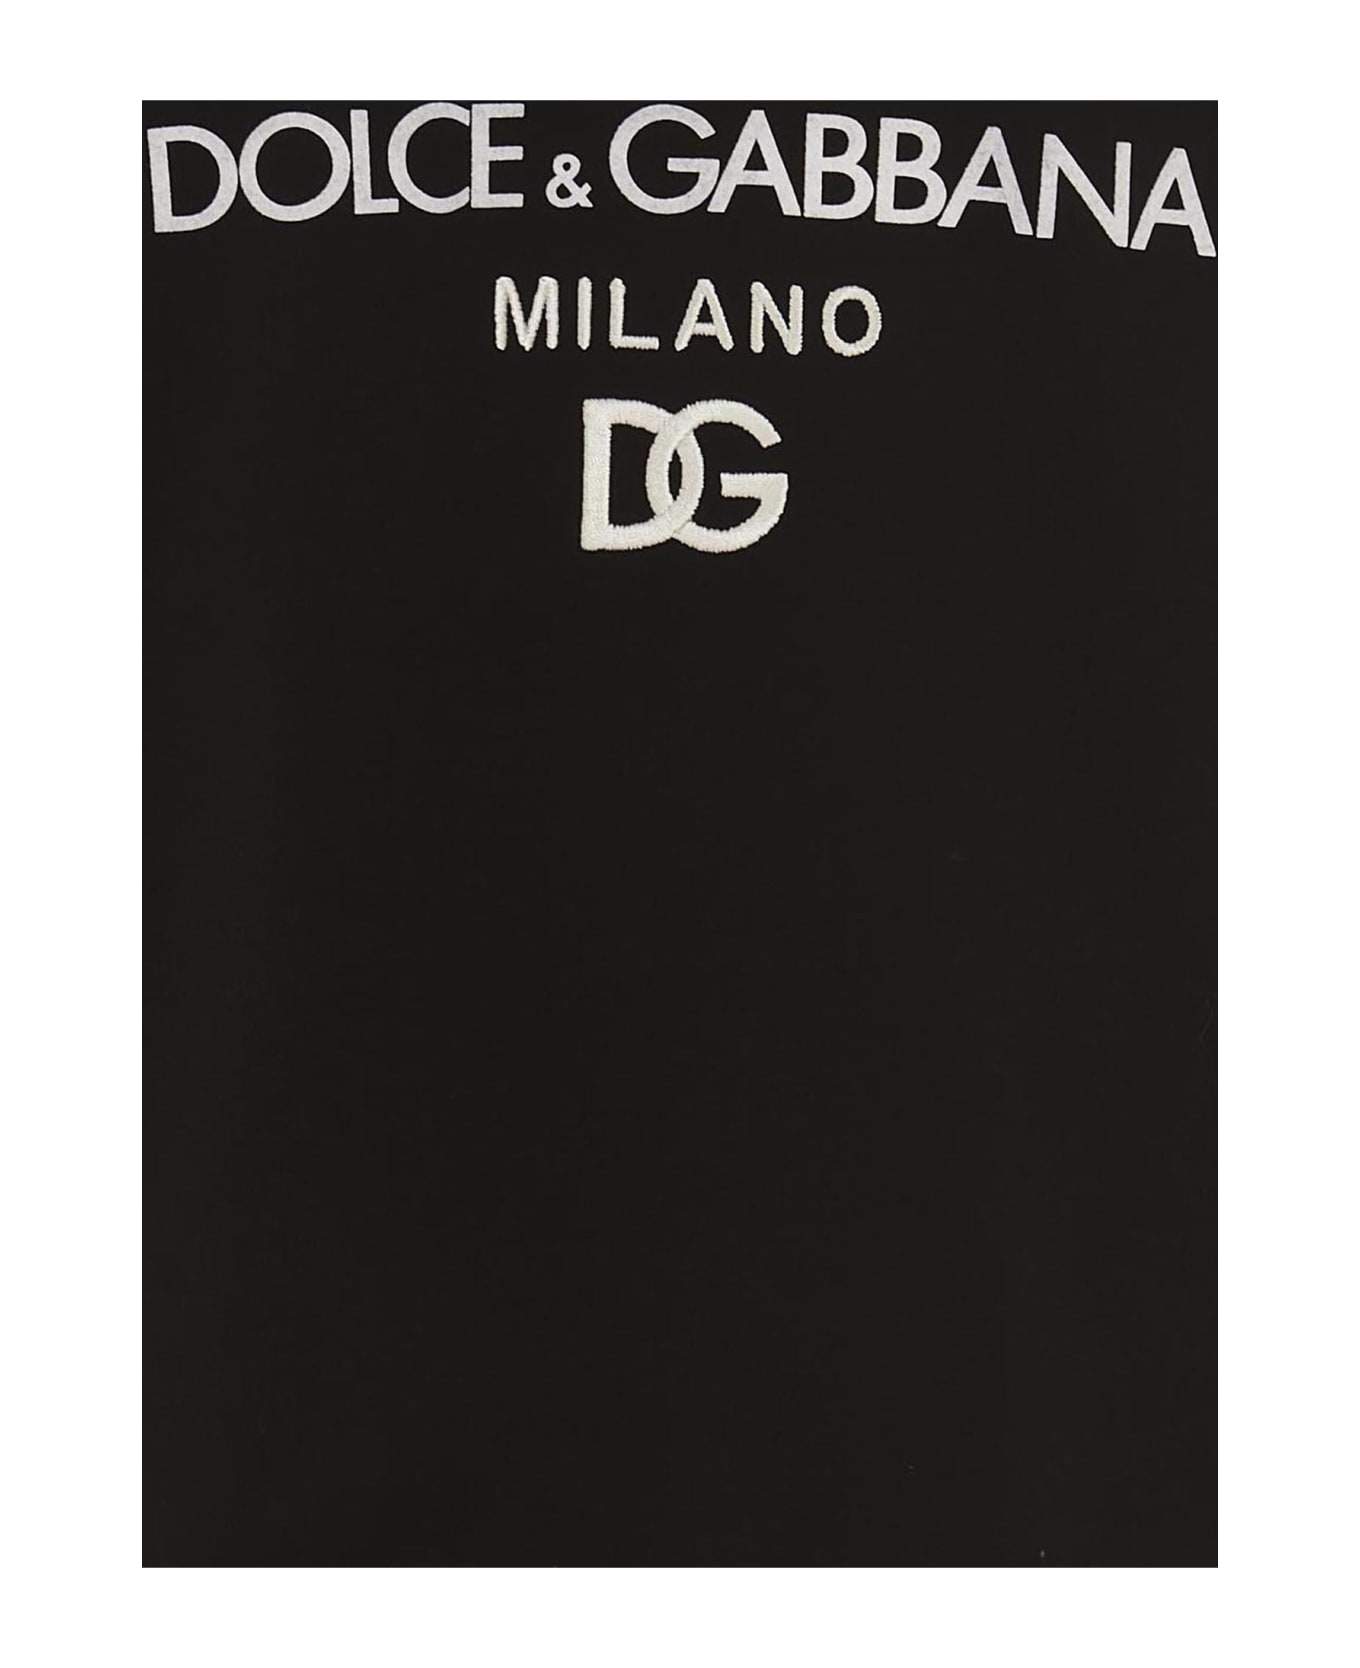 Dolce & Gabbana 'essential' Sweatshirt - White/Black ニットウェア＆スウェットシャツ